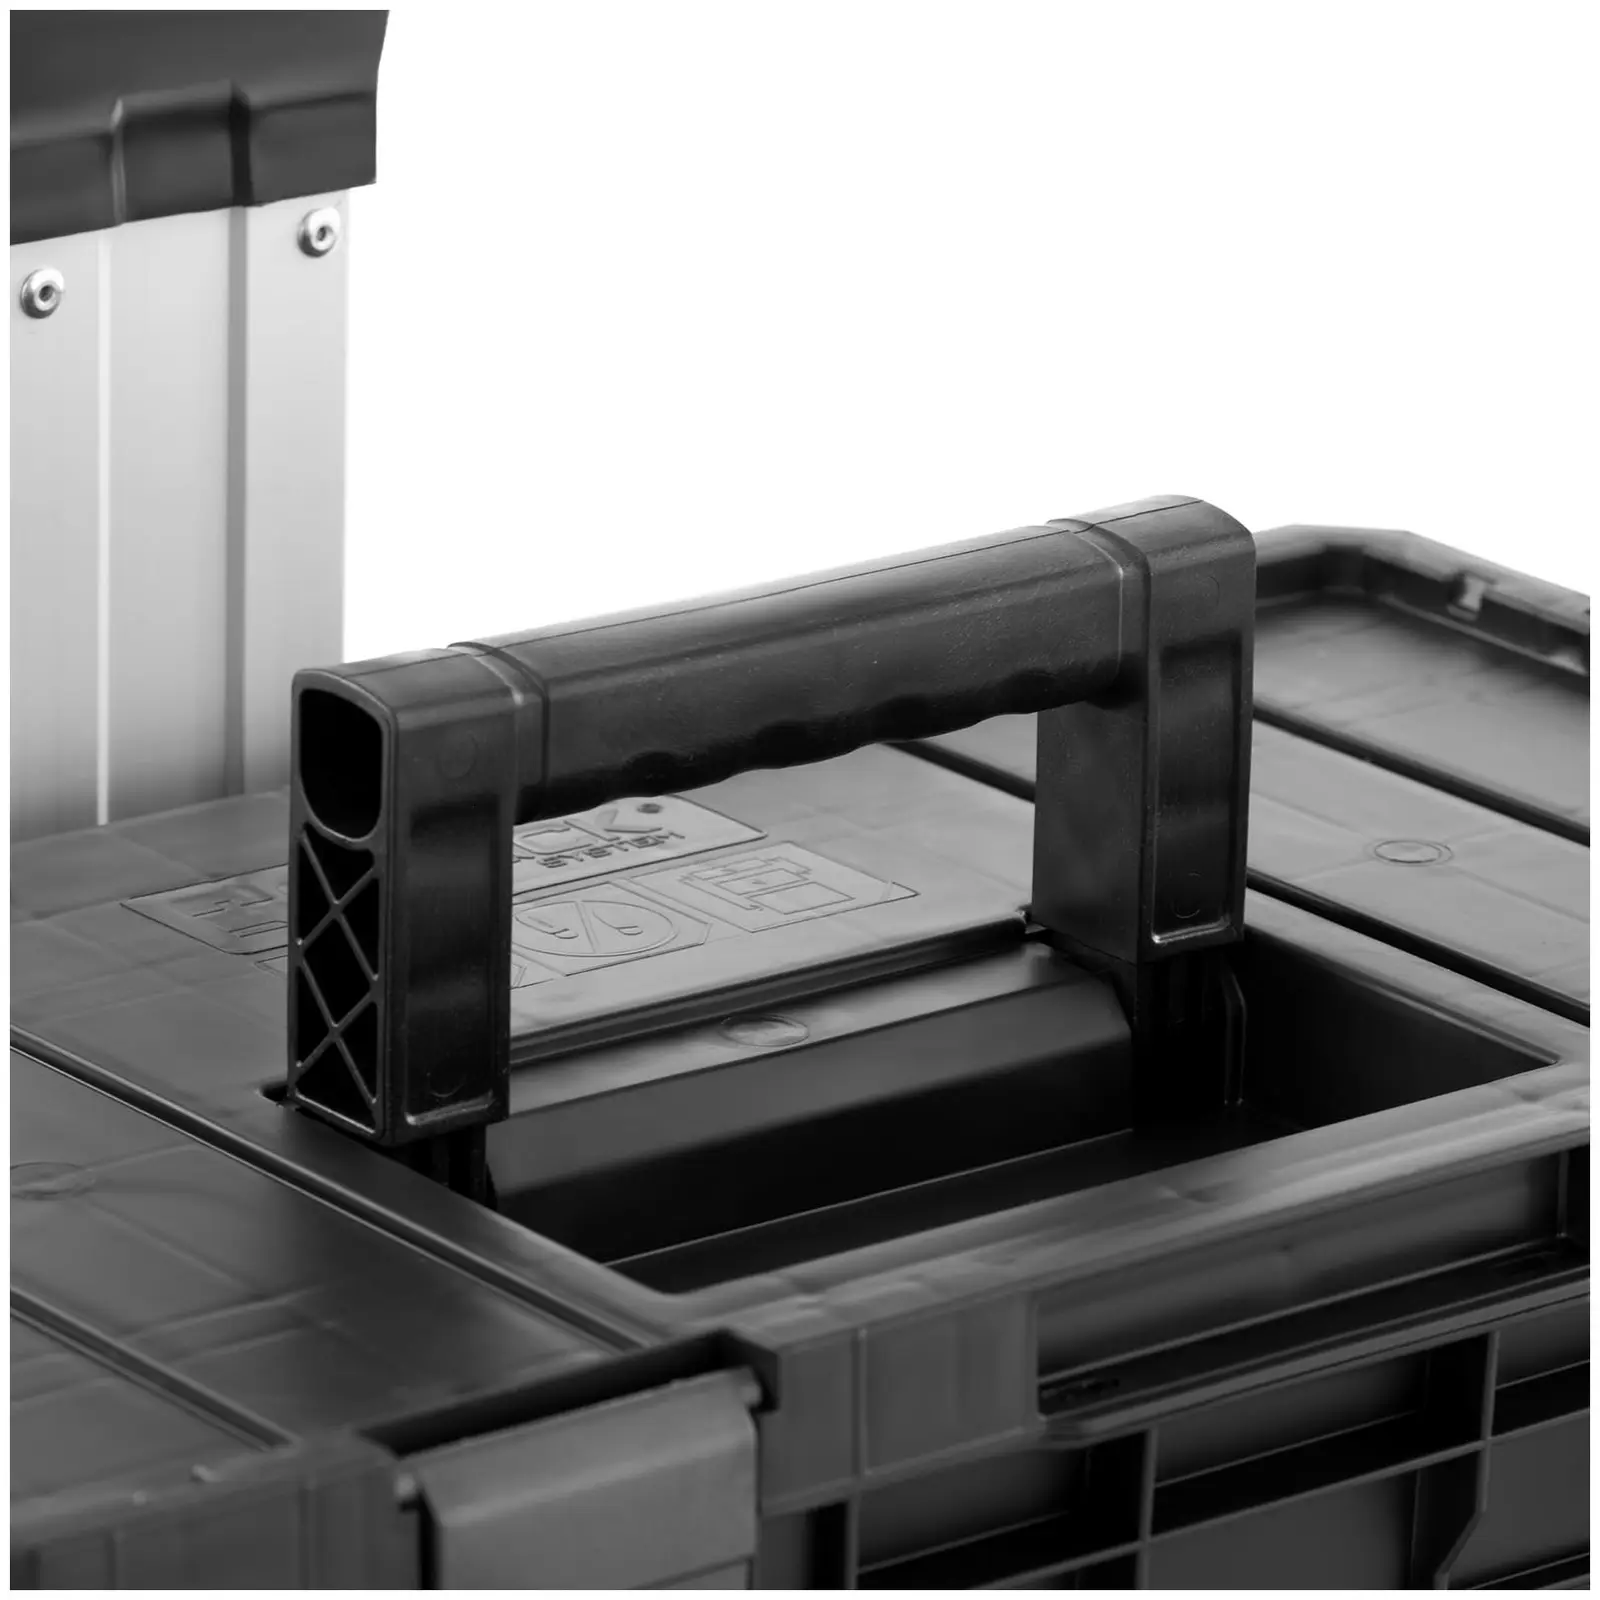 6-i-1 Organizer FLEX Plus verktygslåda - Set inkl. låda, box och organizer